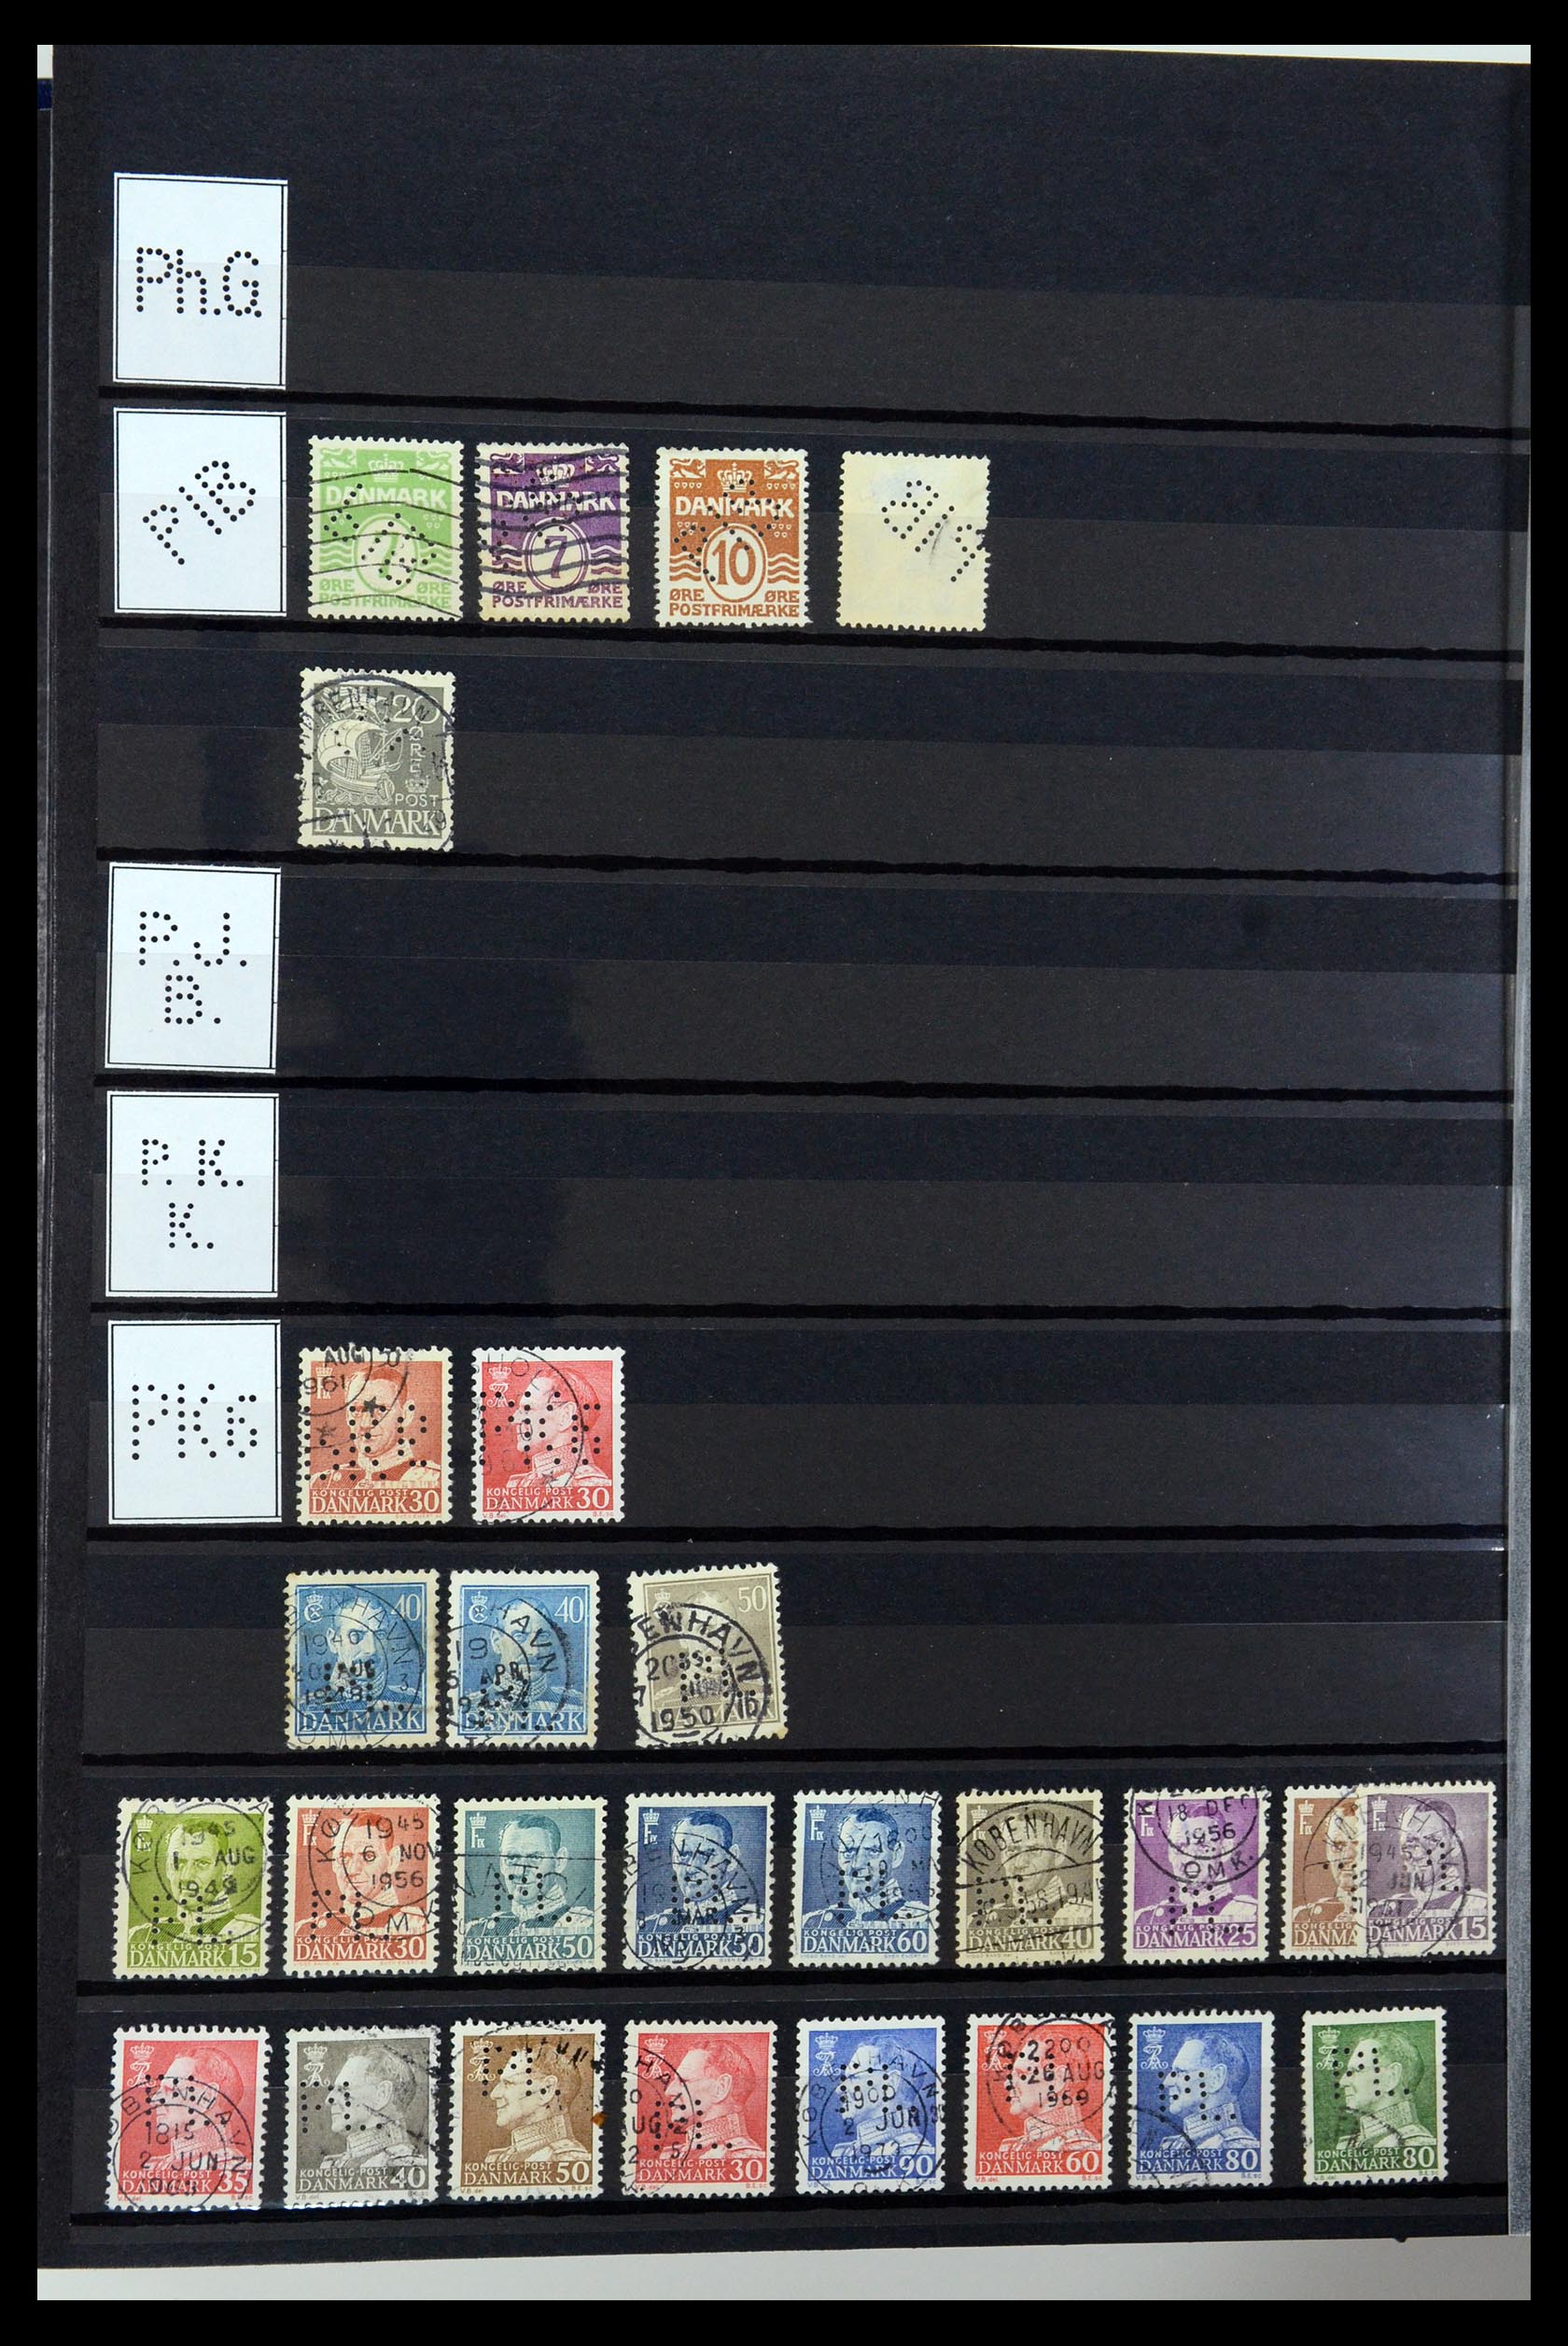 36396 193 - Stamp collection 36396 Denmark perfins.